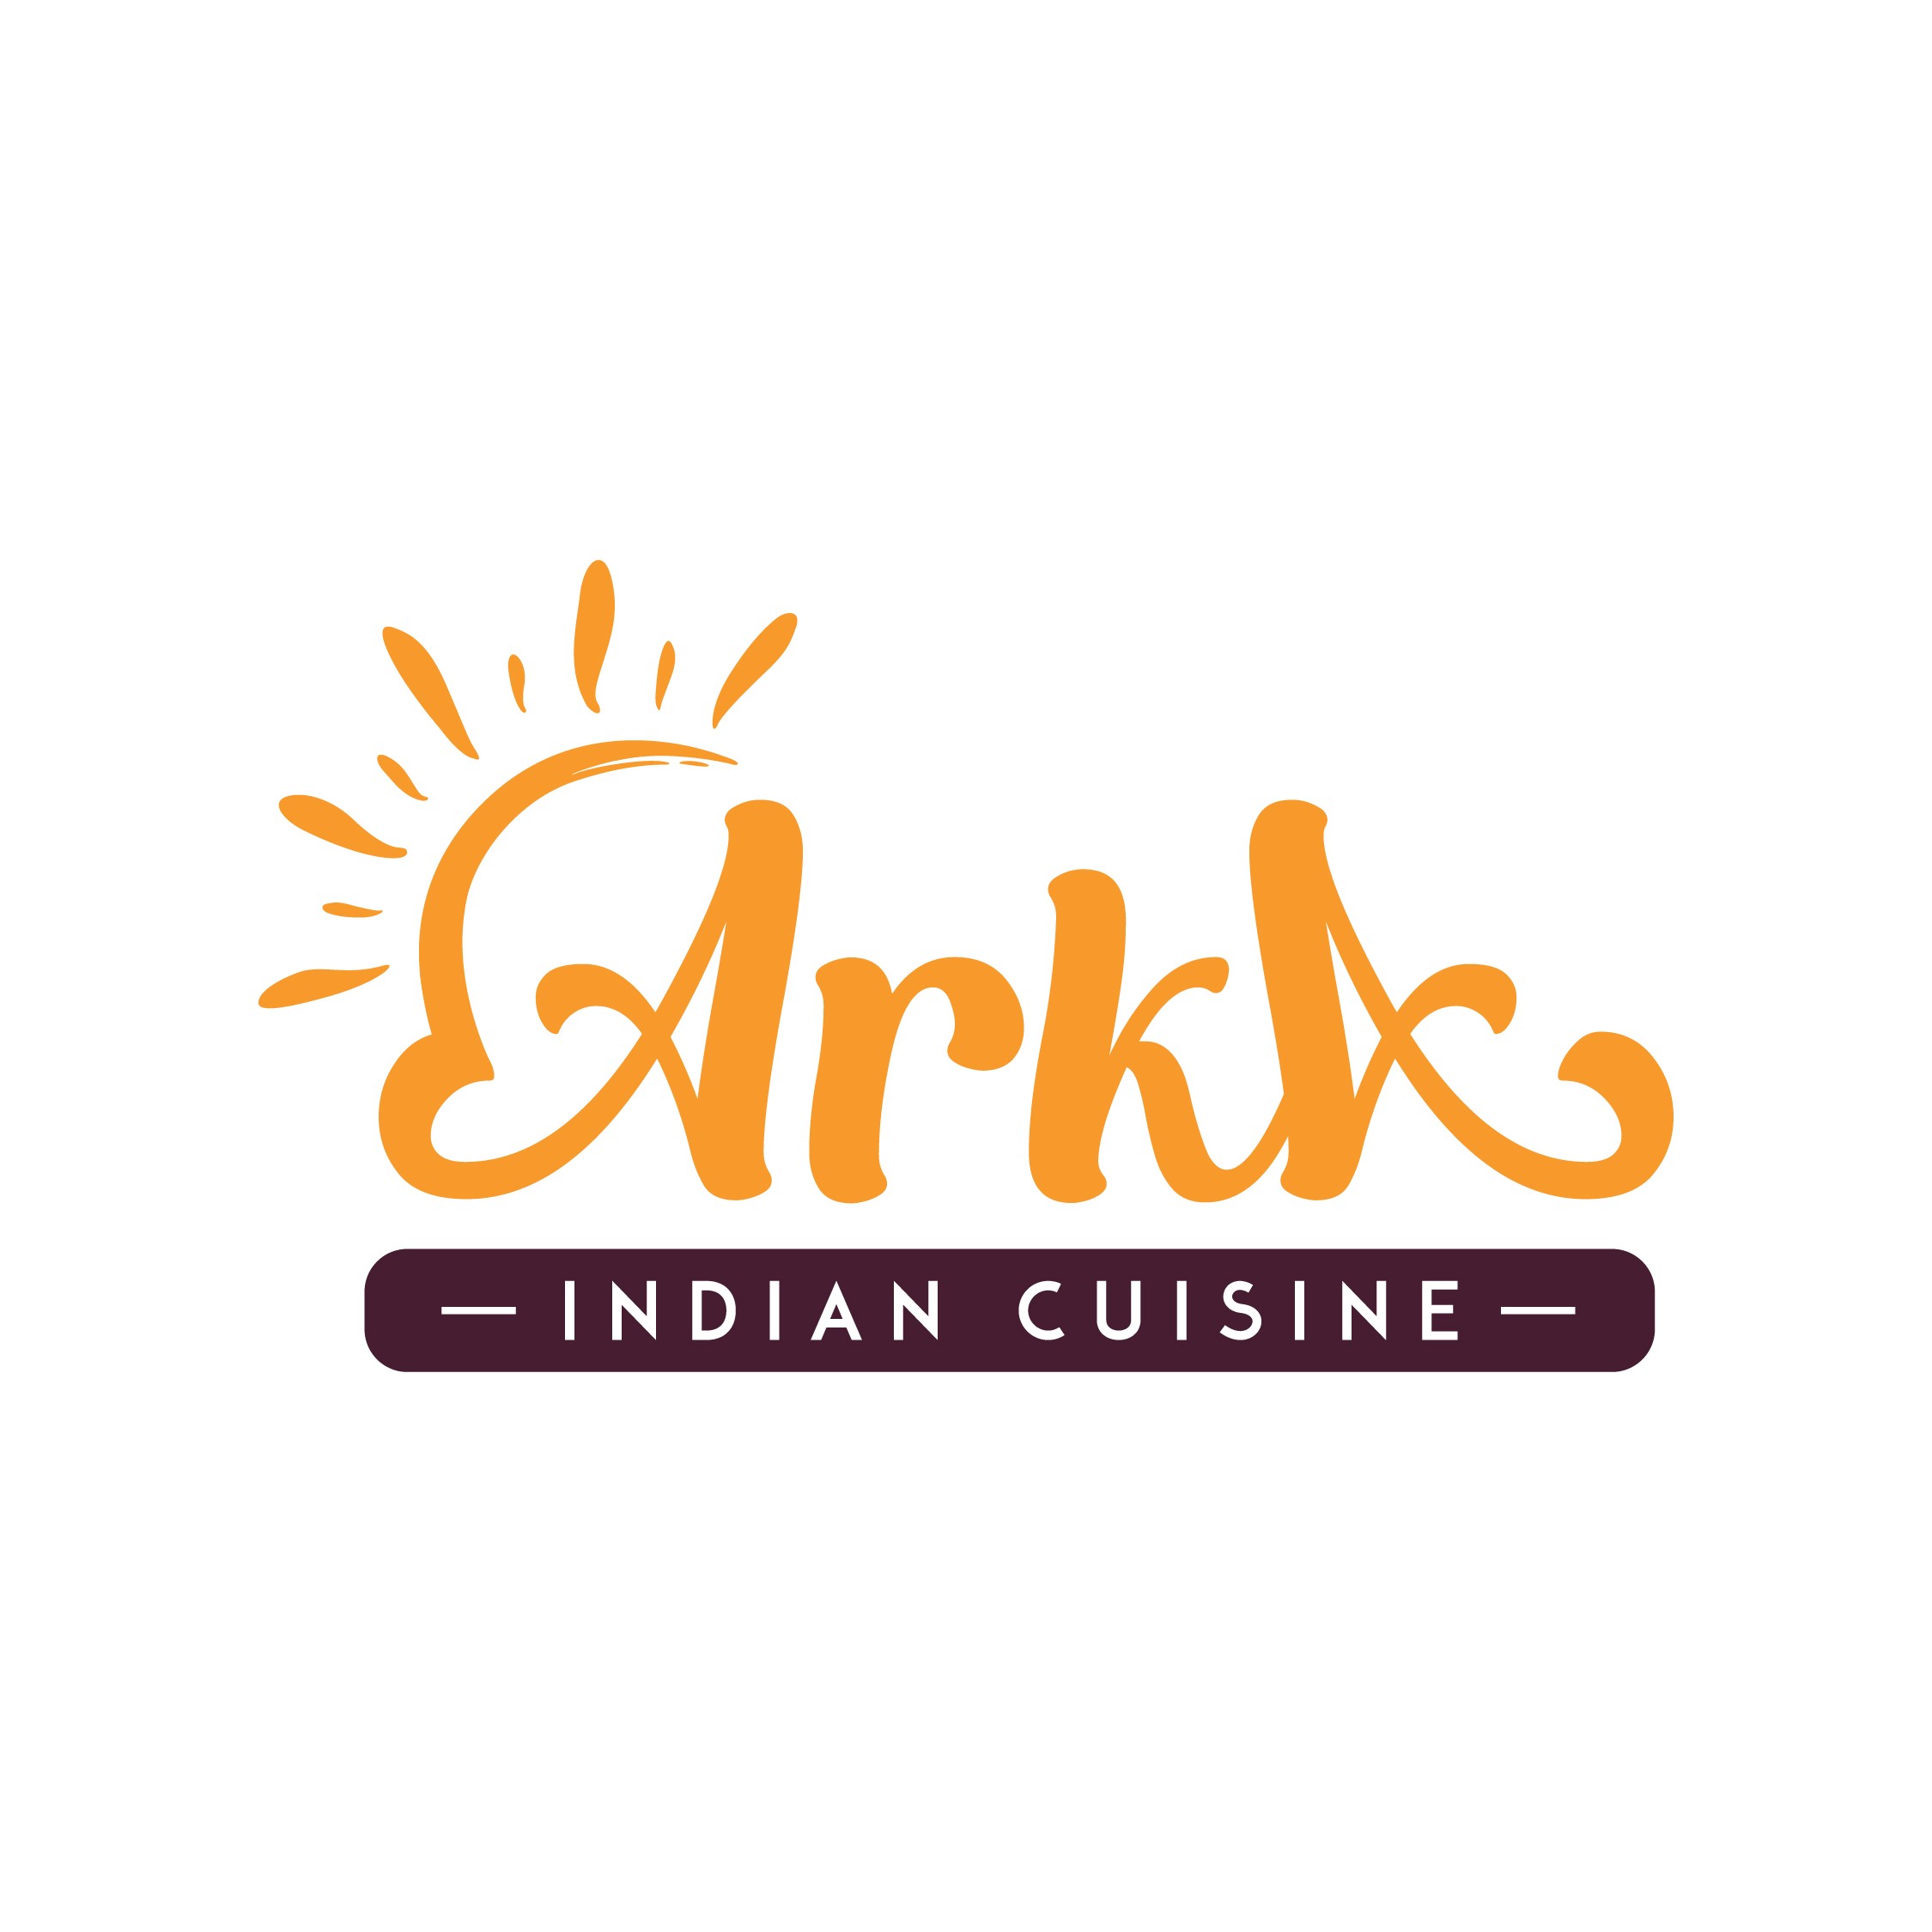 Arka Indian Cuisine 135 Massachusetts Avenue